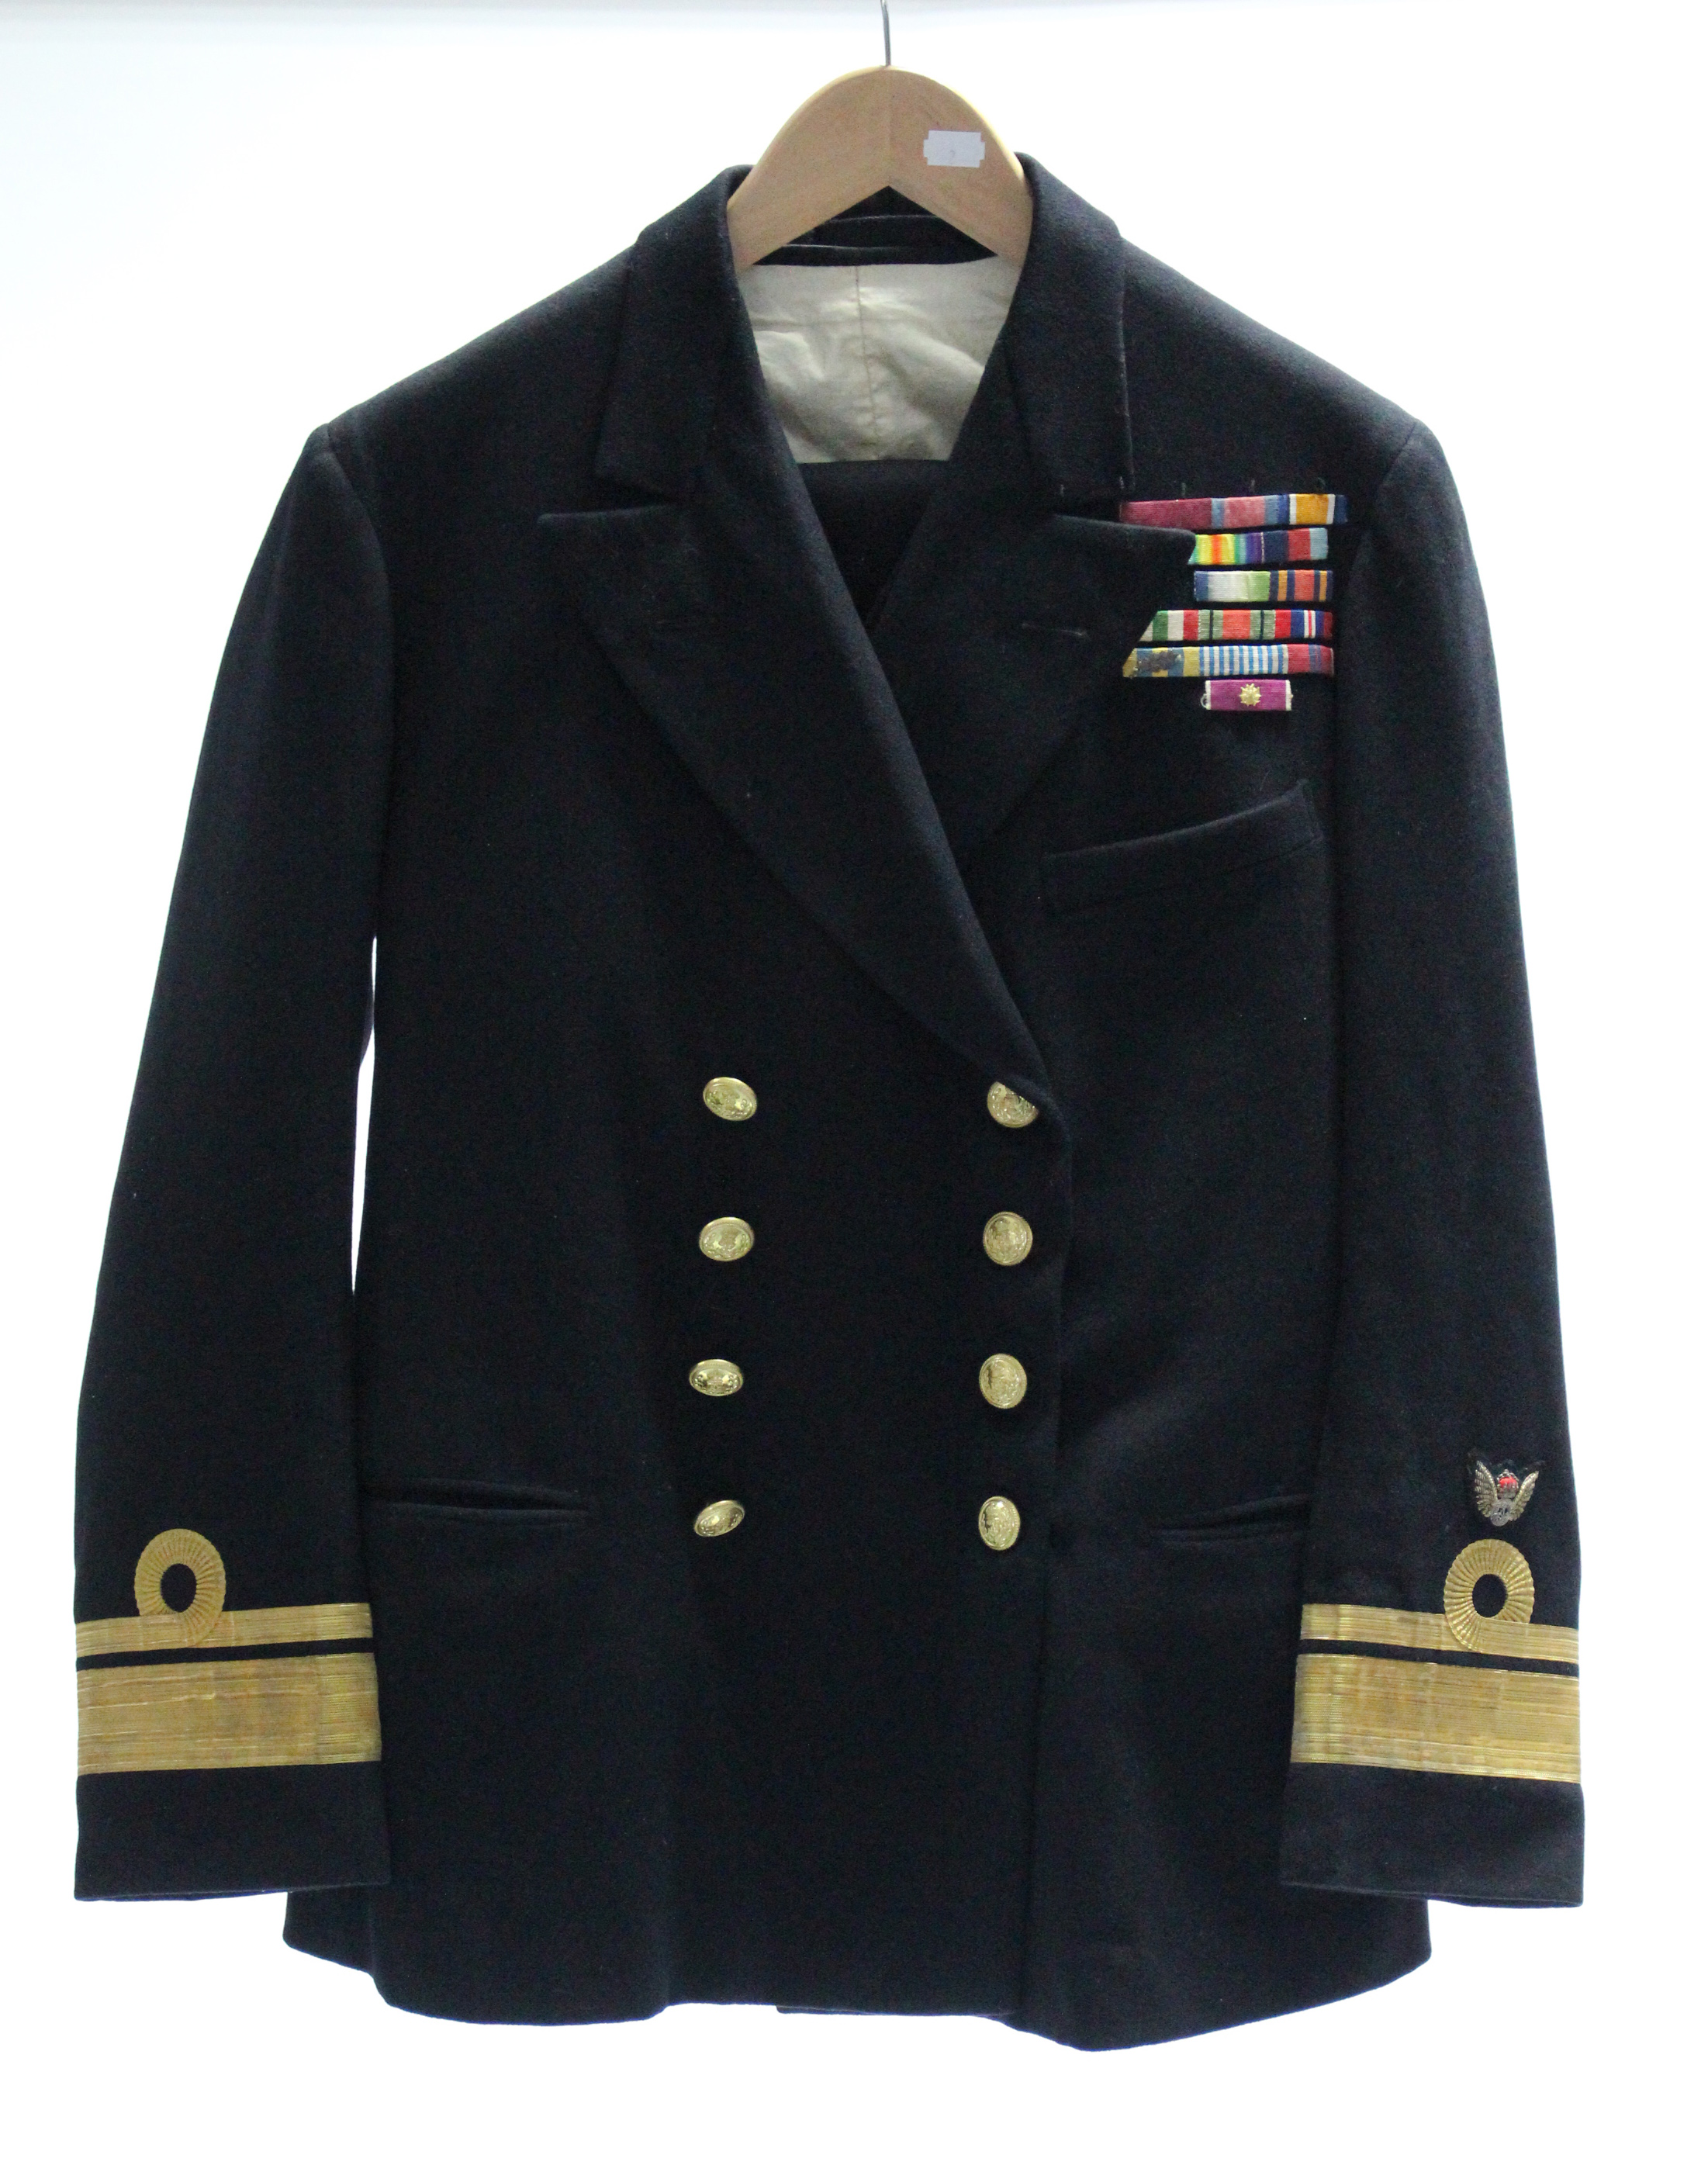 A WORLD WAR II ROYAL NAVAL REAR ADMIRAL’S DRESS UNIFORM comprising a tail coat; a dress jacket; a - Image 2 of 6